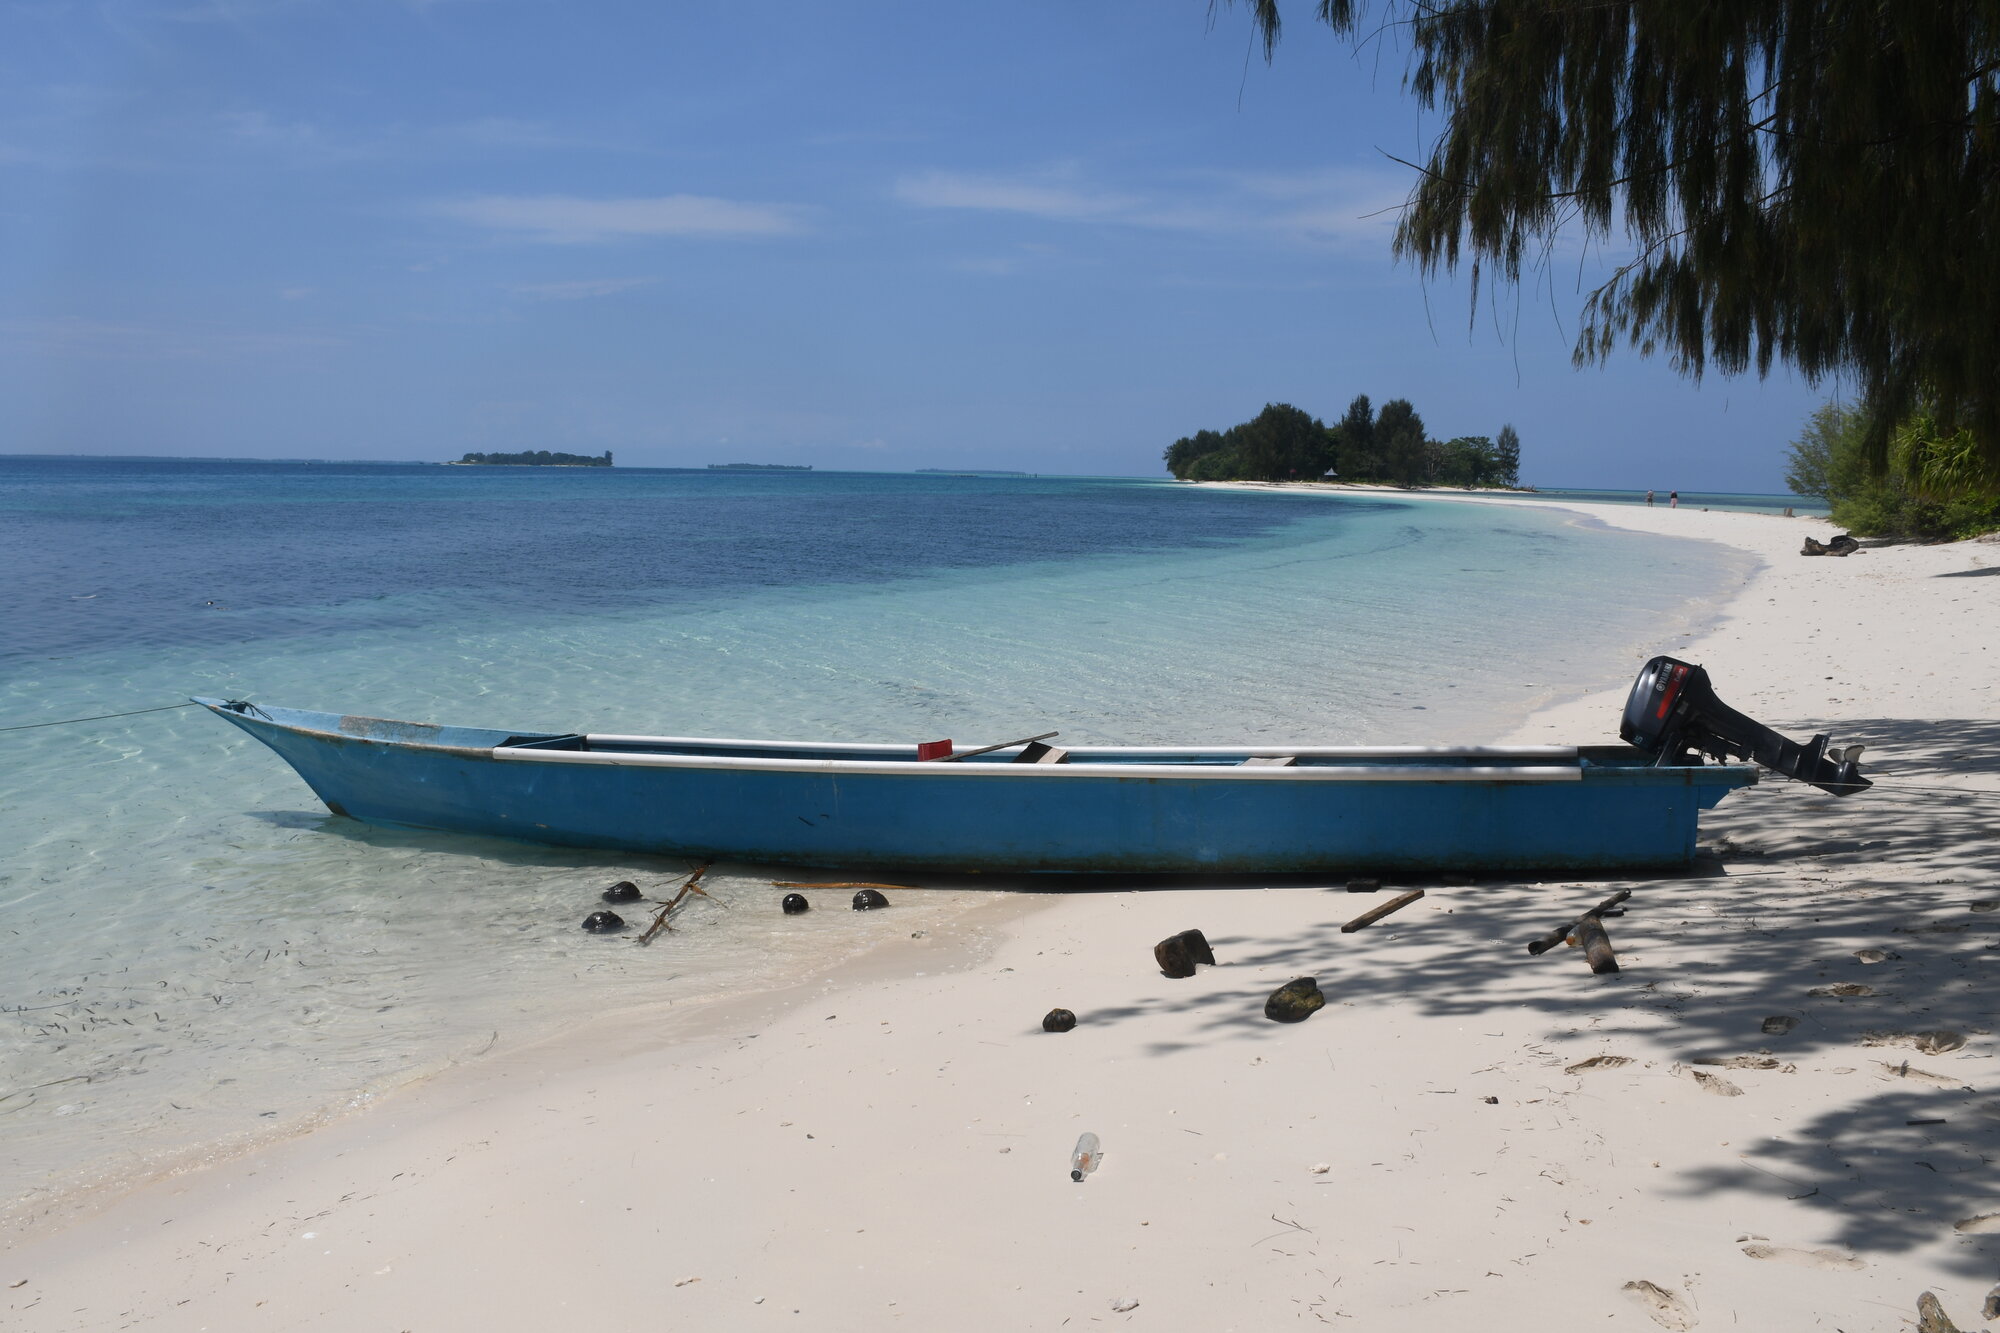 Dodola Island, Morotai: Boat on white sandy beach